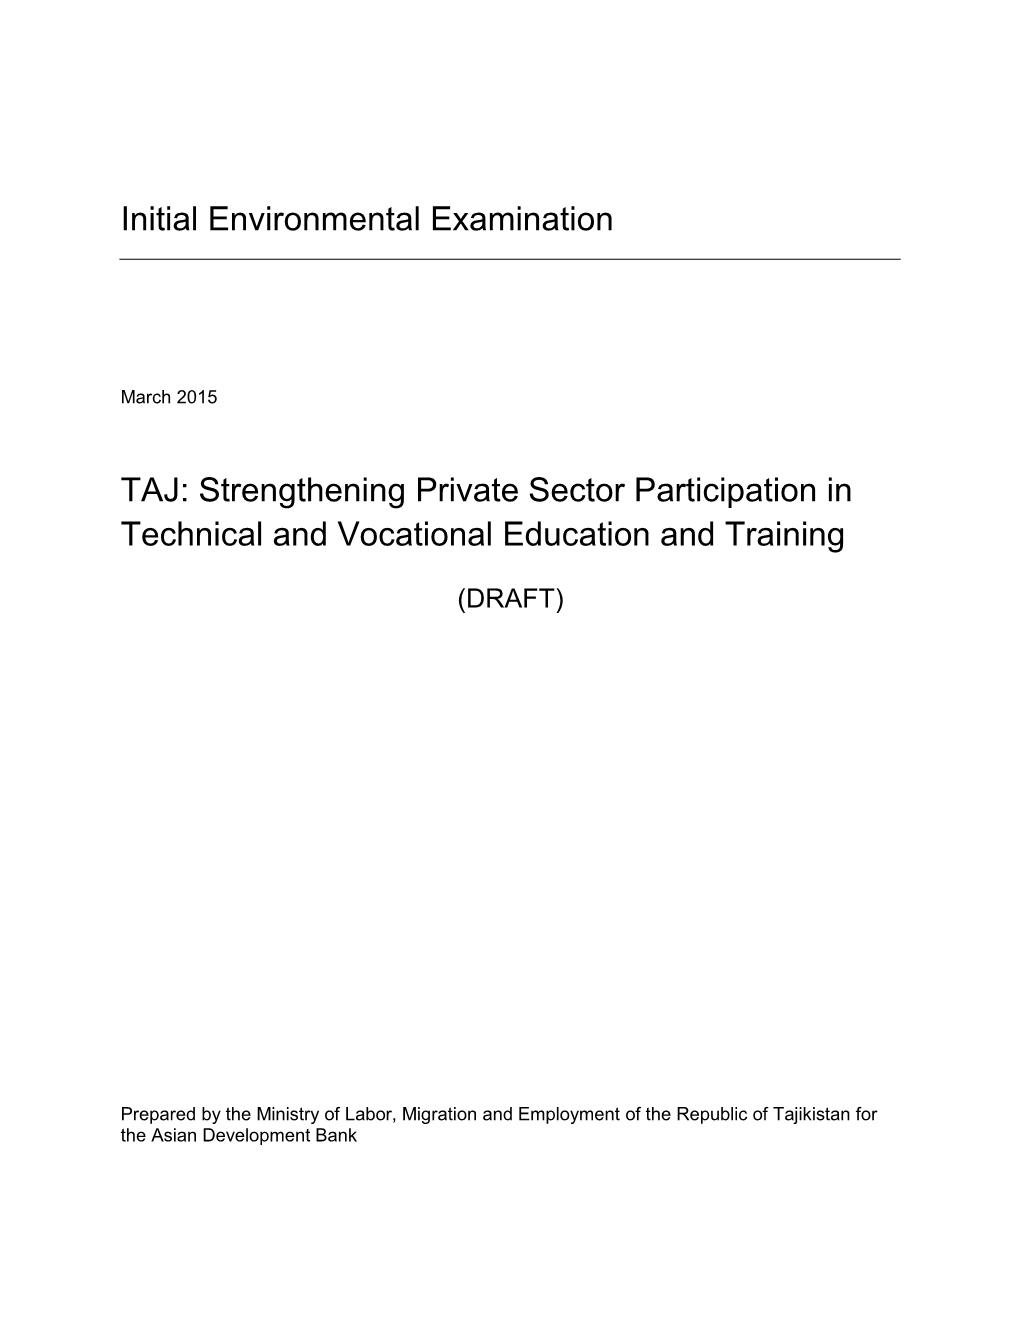 46535-001: Initial Environmental Examination